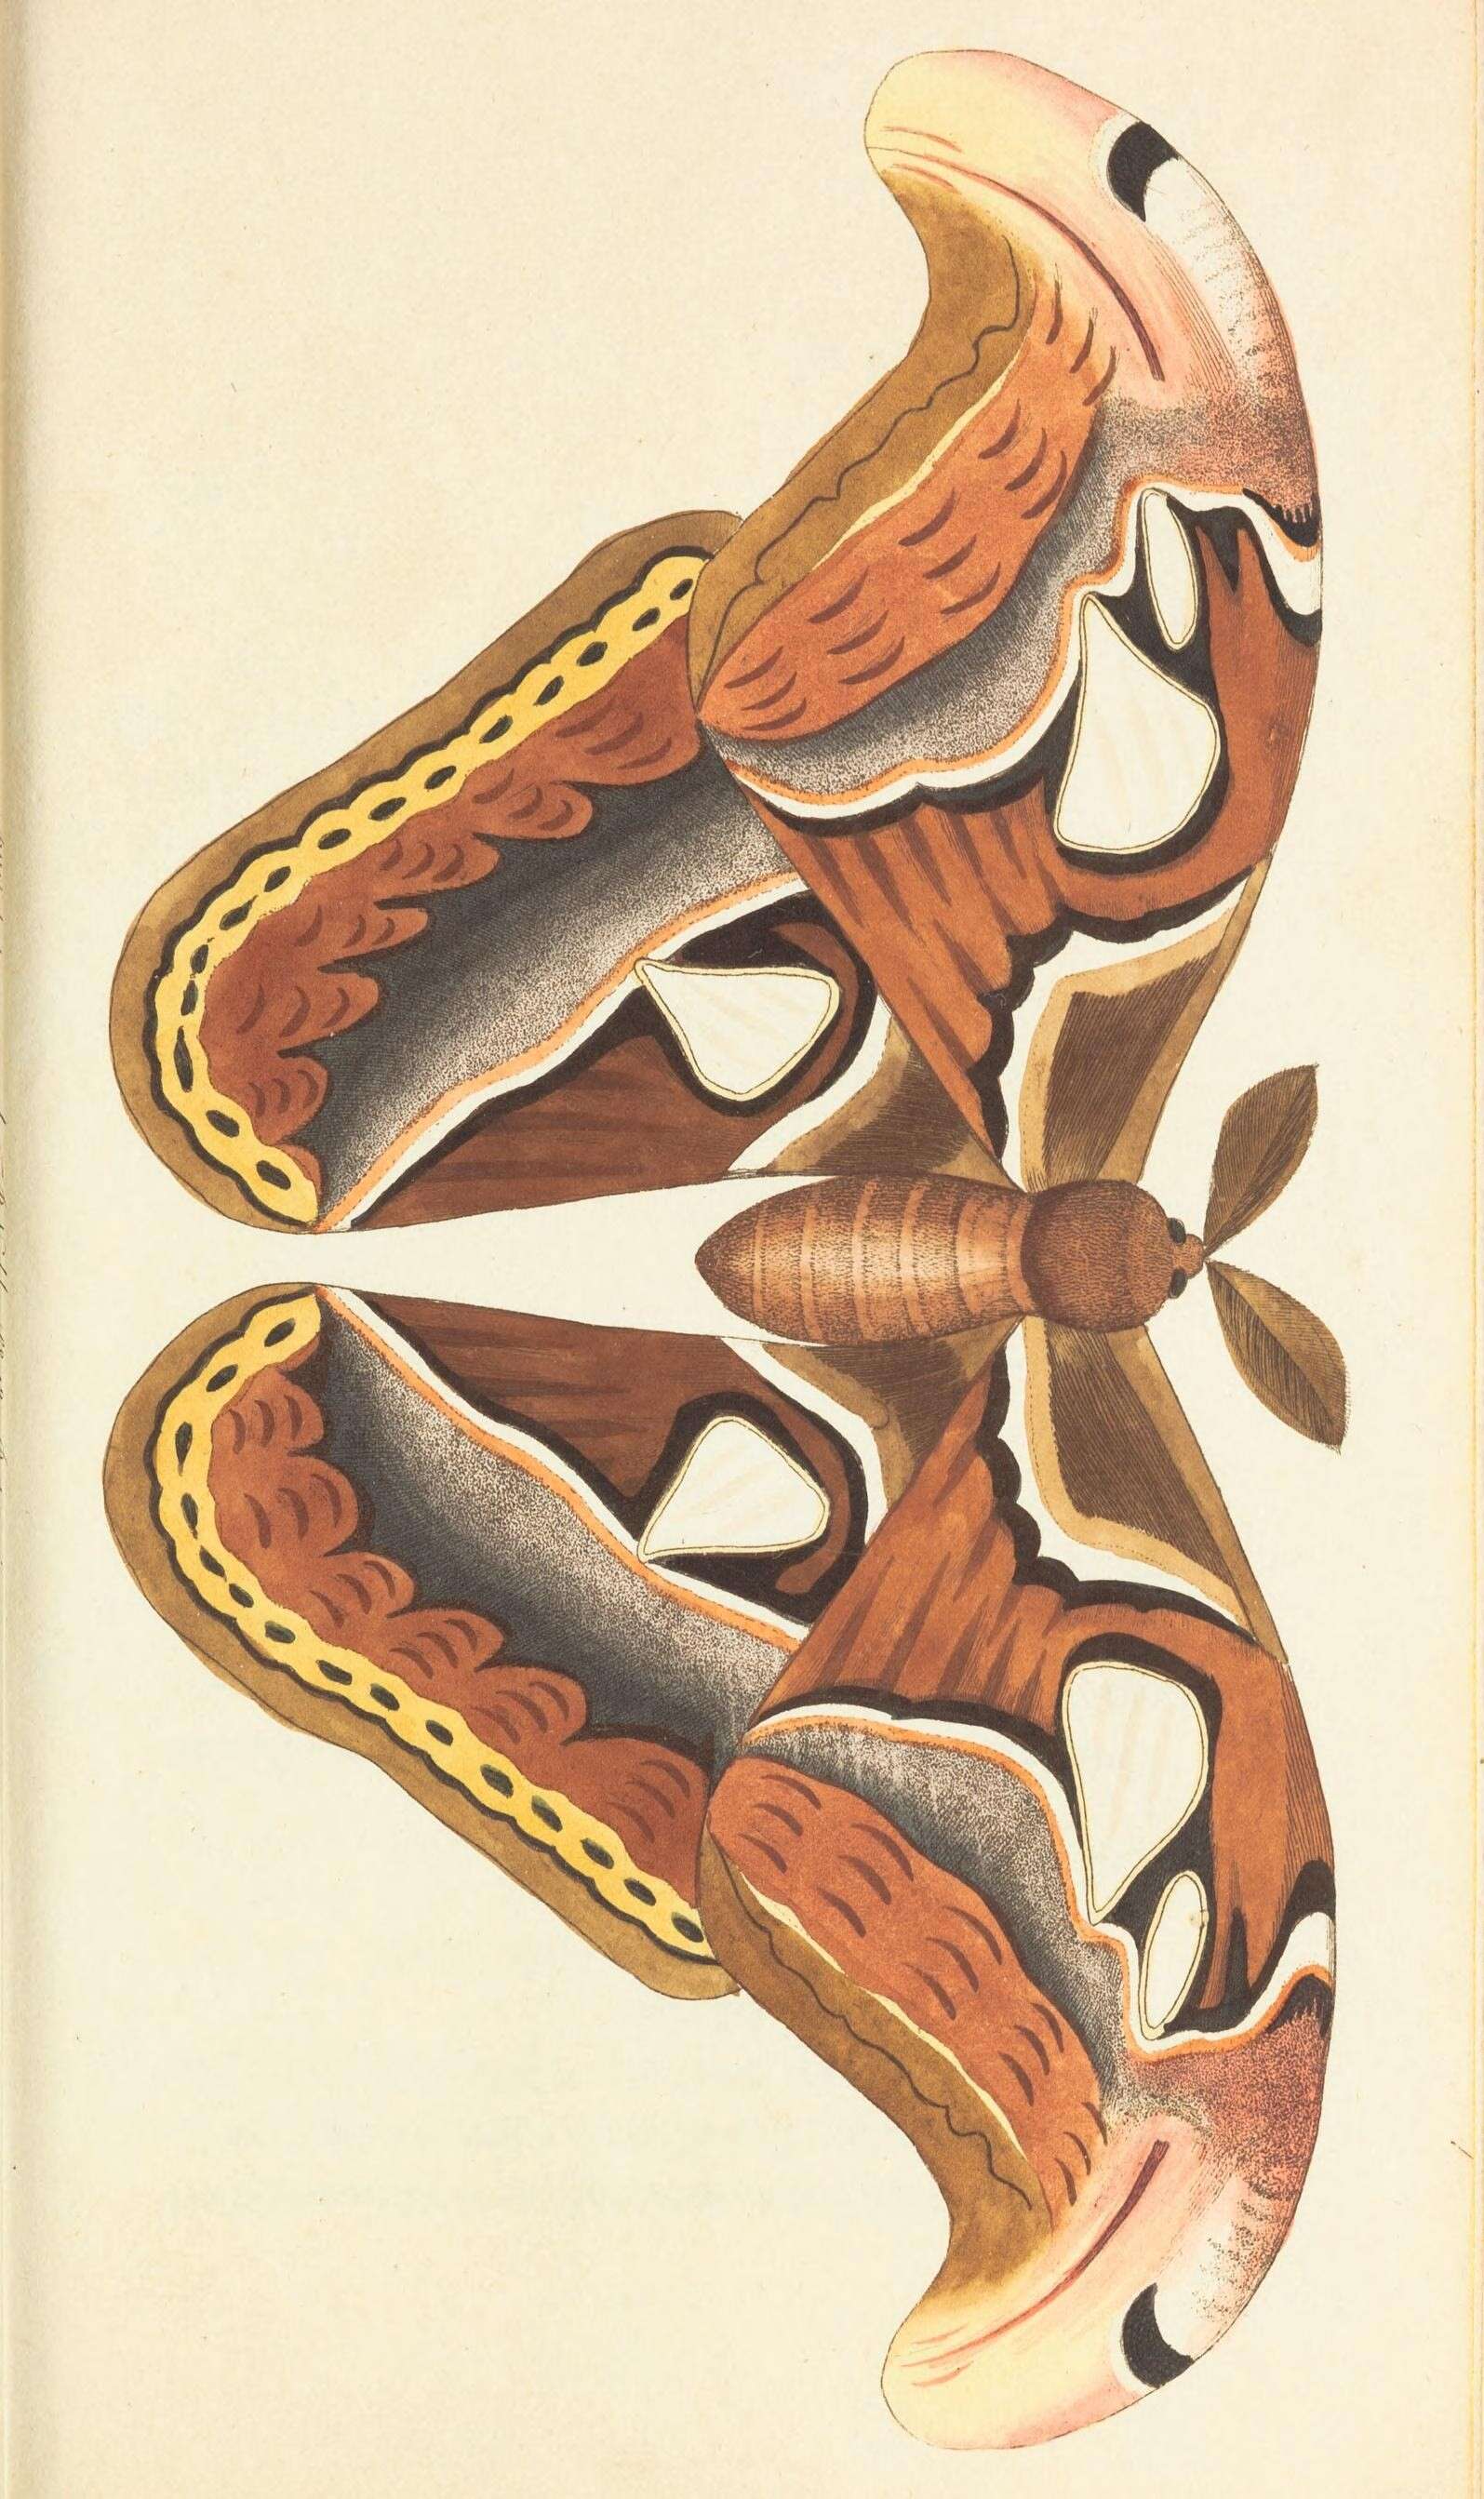 Image de Attacus atlas (Linnaeus 1758)